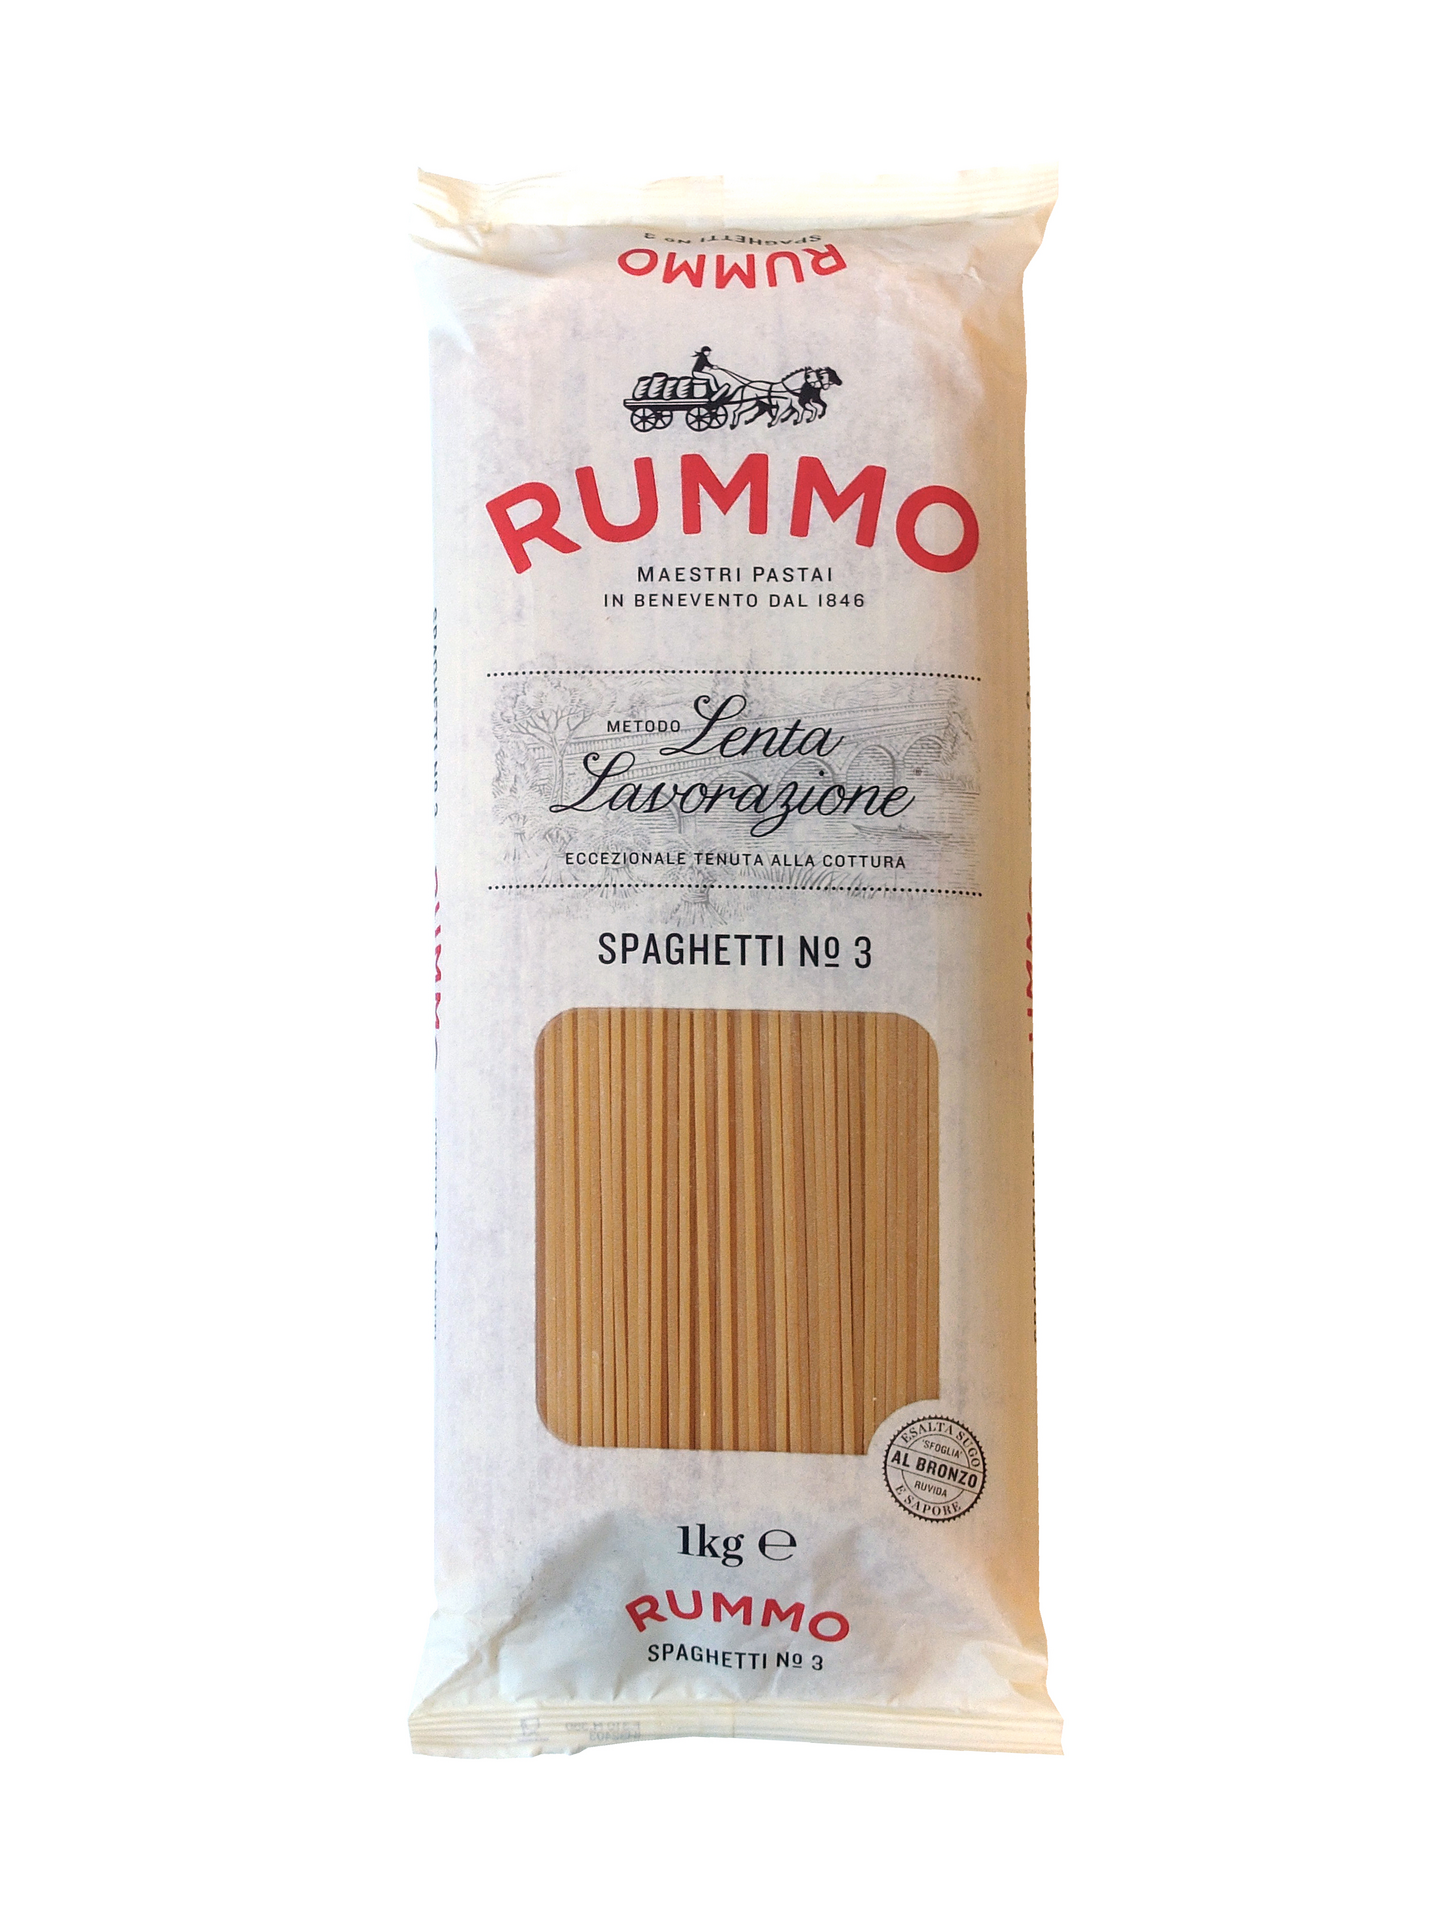 Rummo Spaghetti No 3 1kg